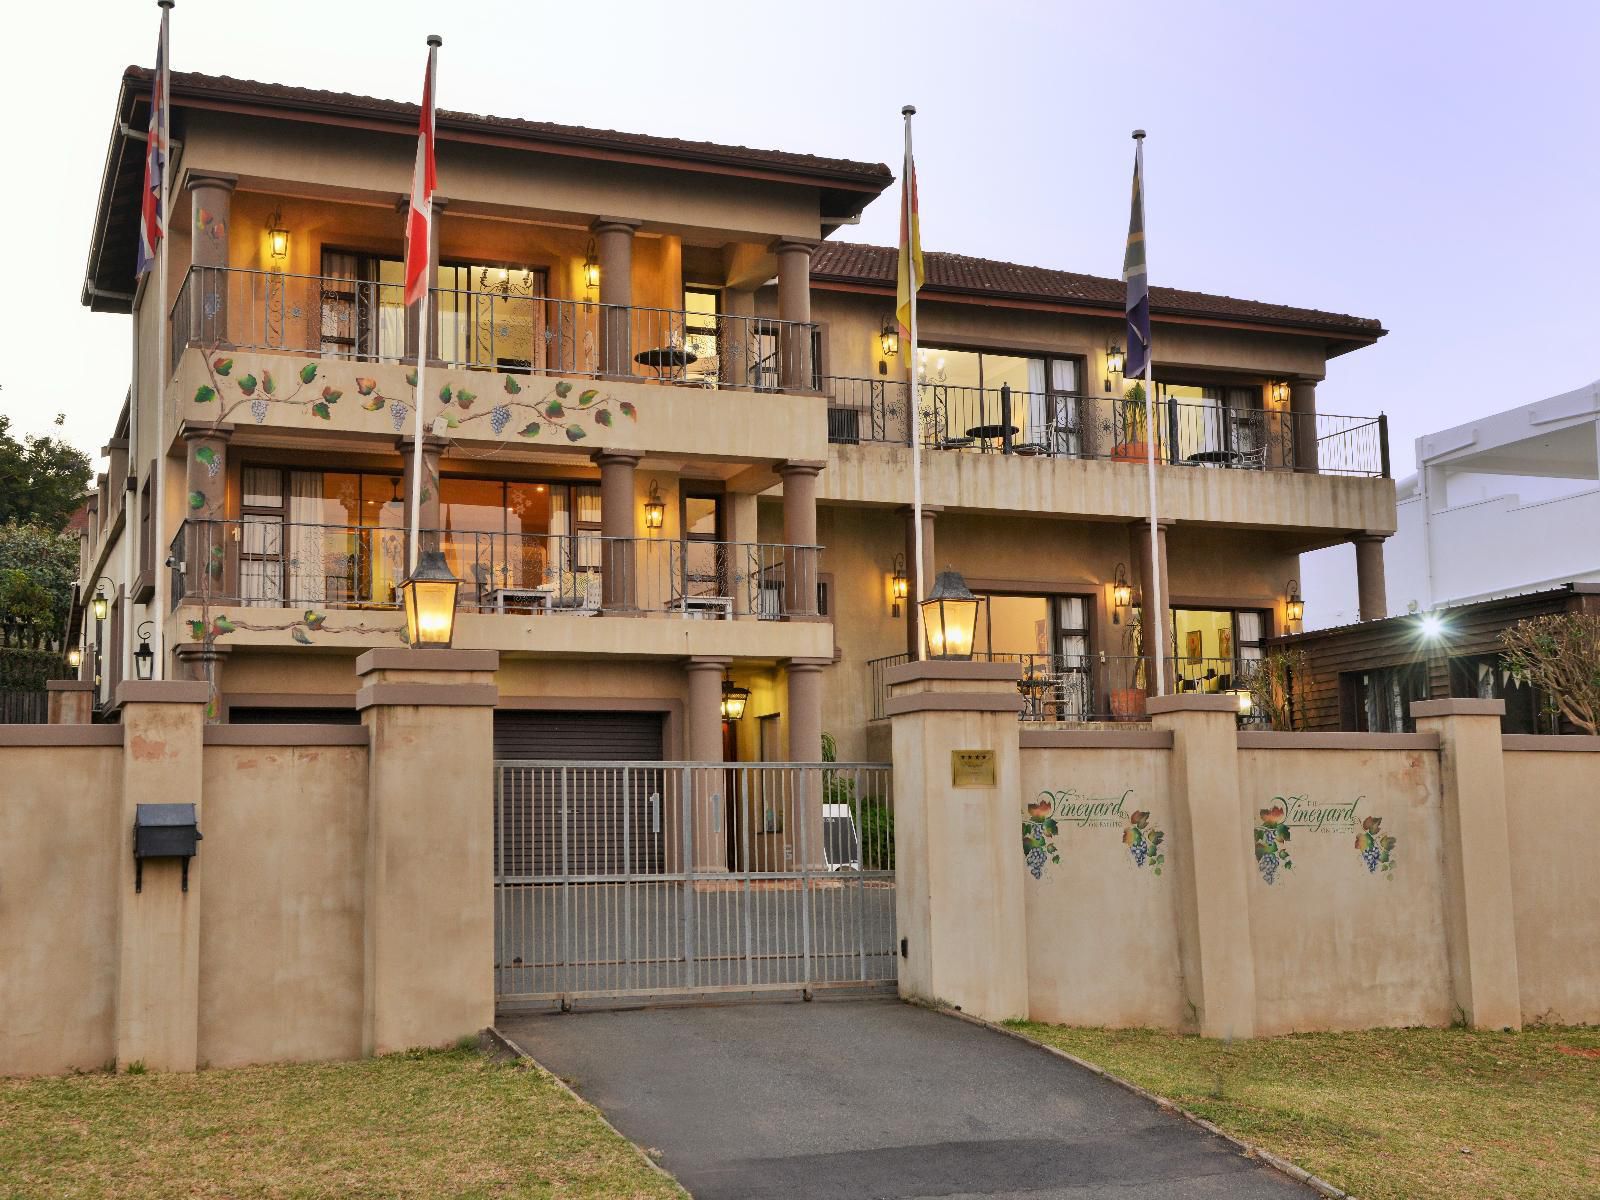 The Vineyard On Ballito Ballito Kwazulu Natal South Africa House, Building, Architecture